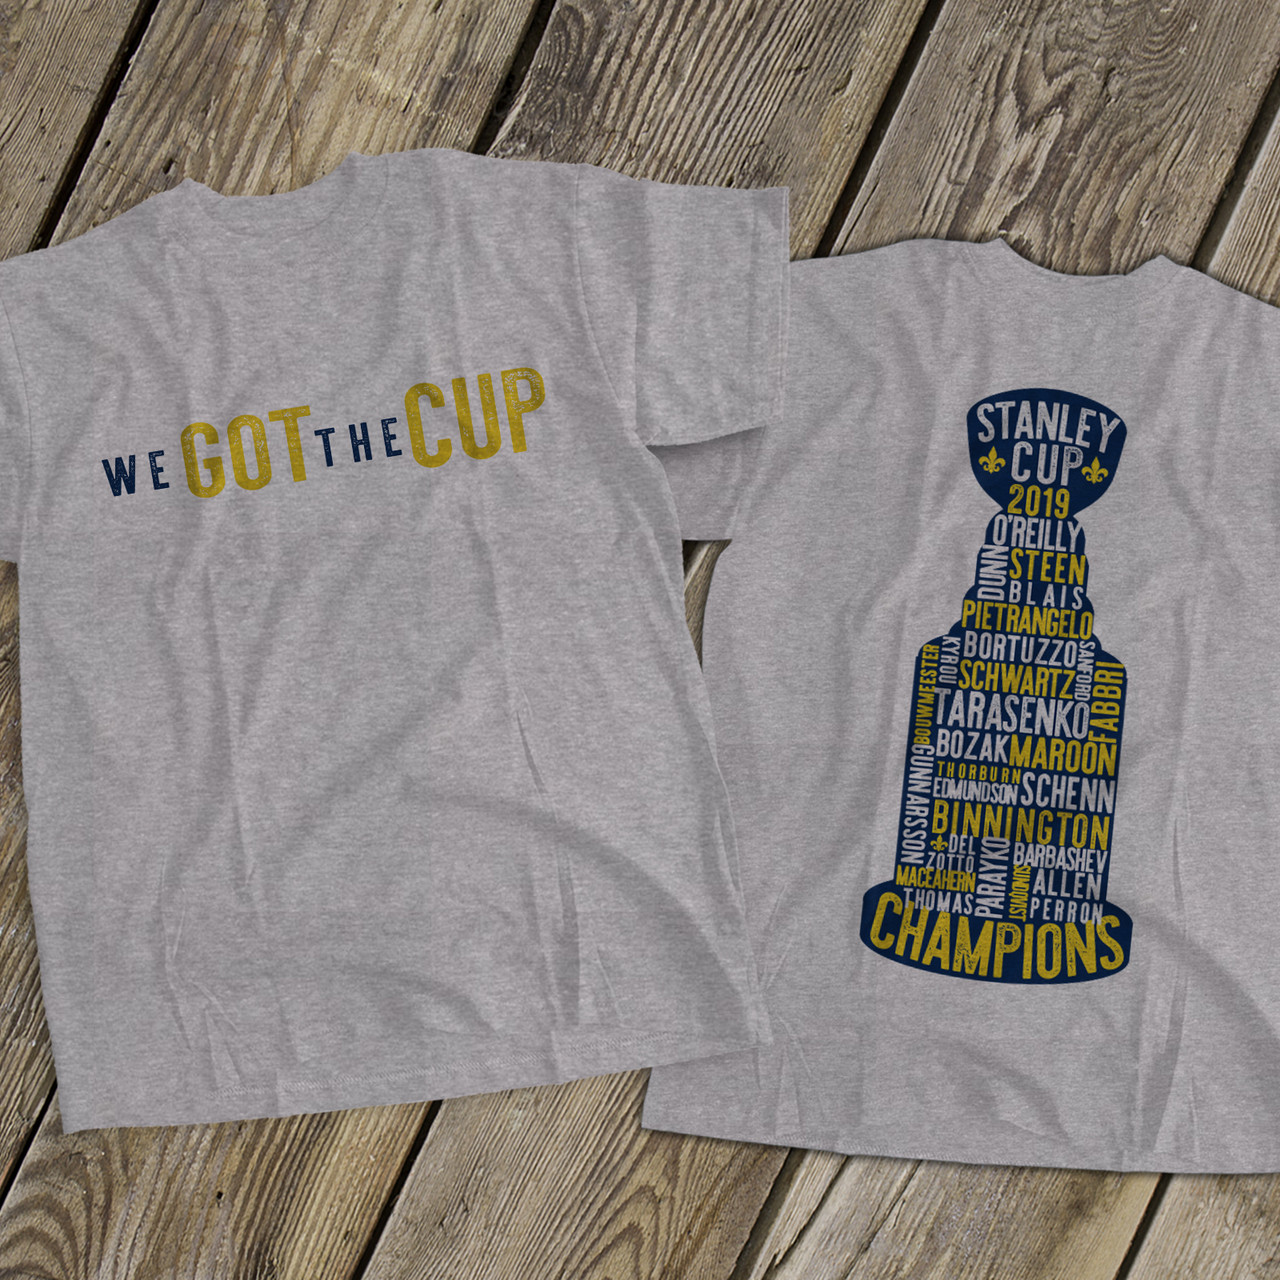 We Went Blues Saint Louis 2019 Cup Champion Dark Unisex Tshirt